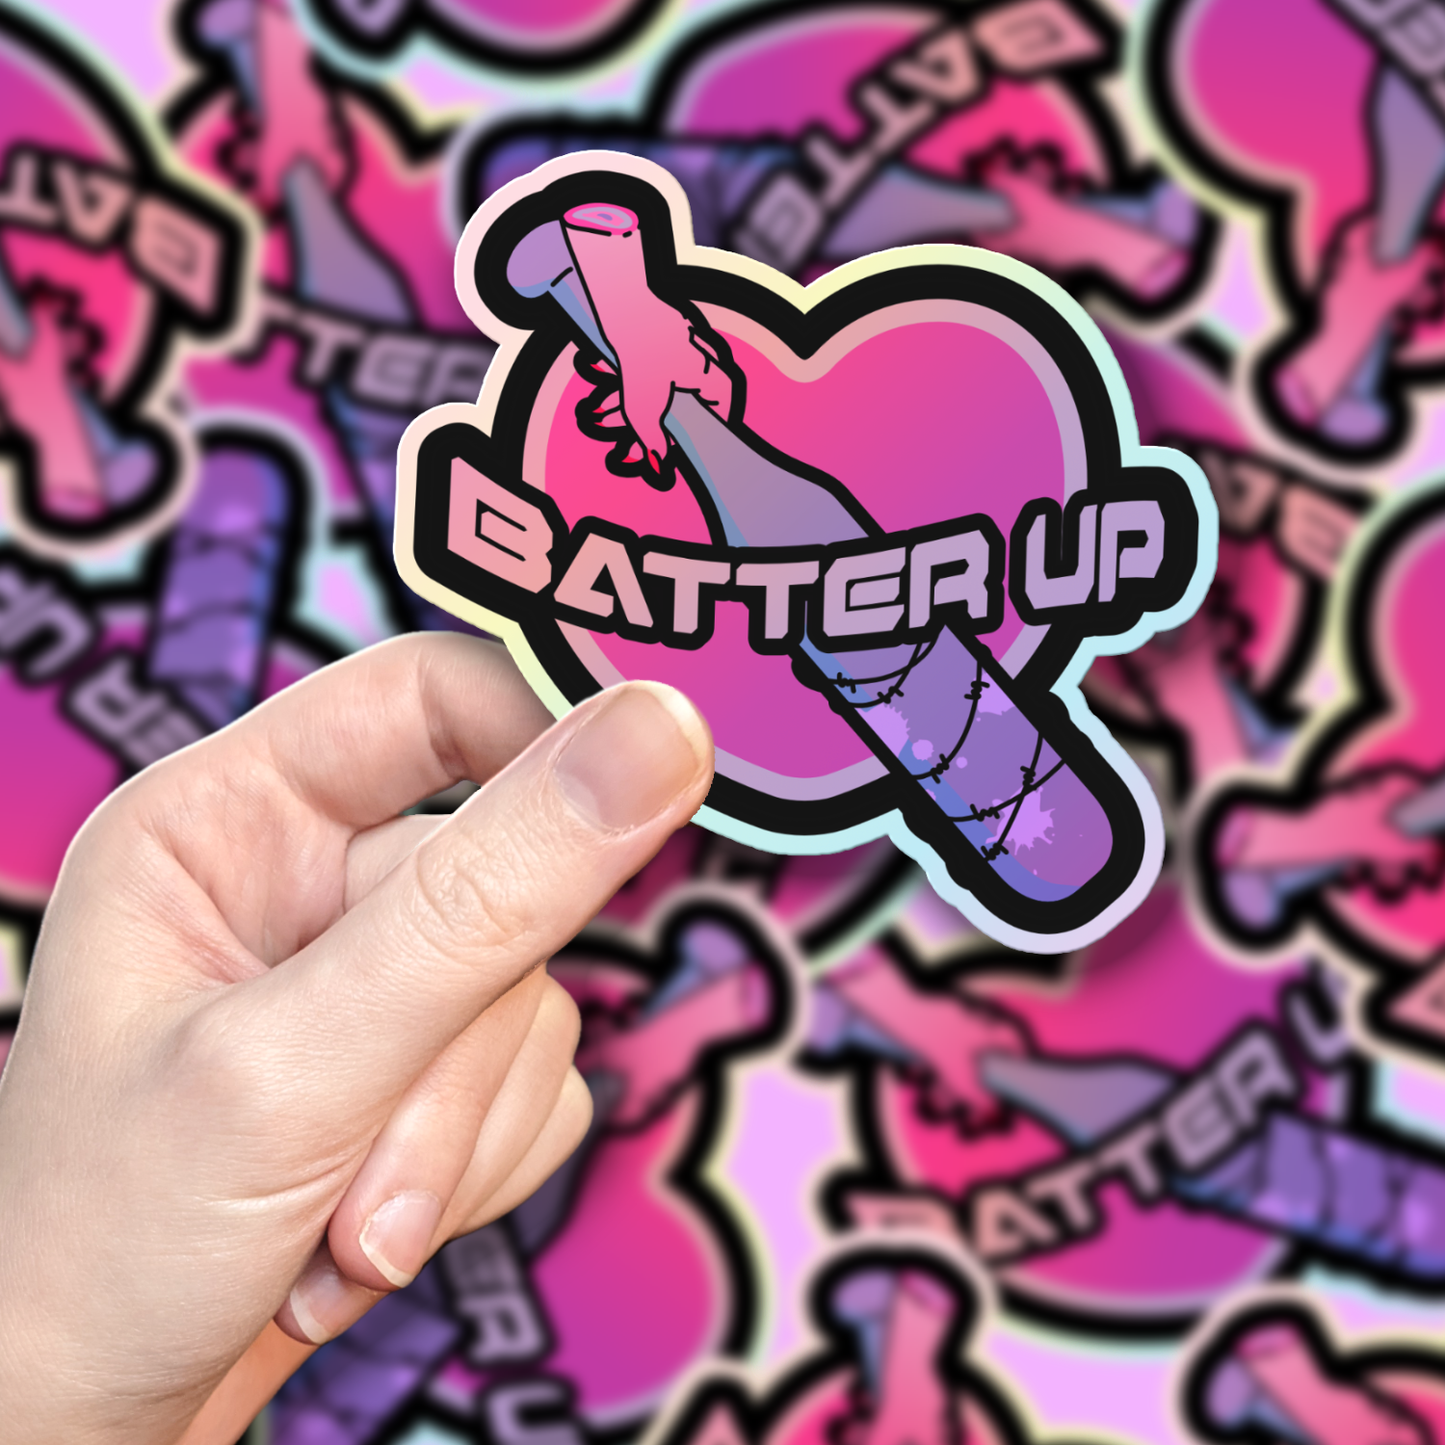 「Batter Up」 Holographic Sticker